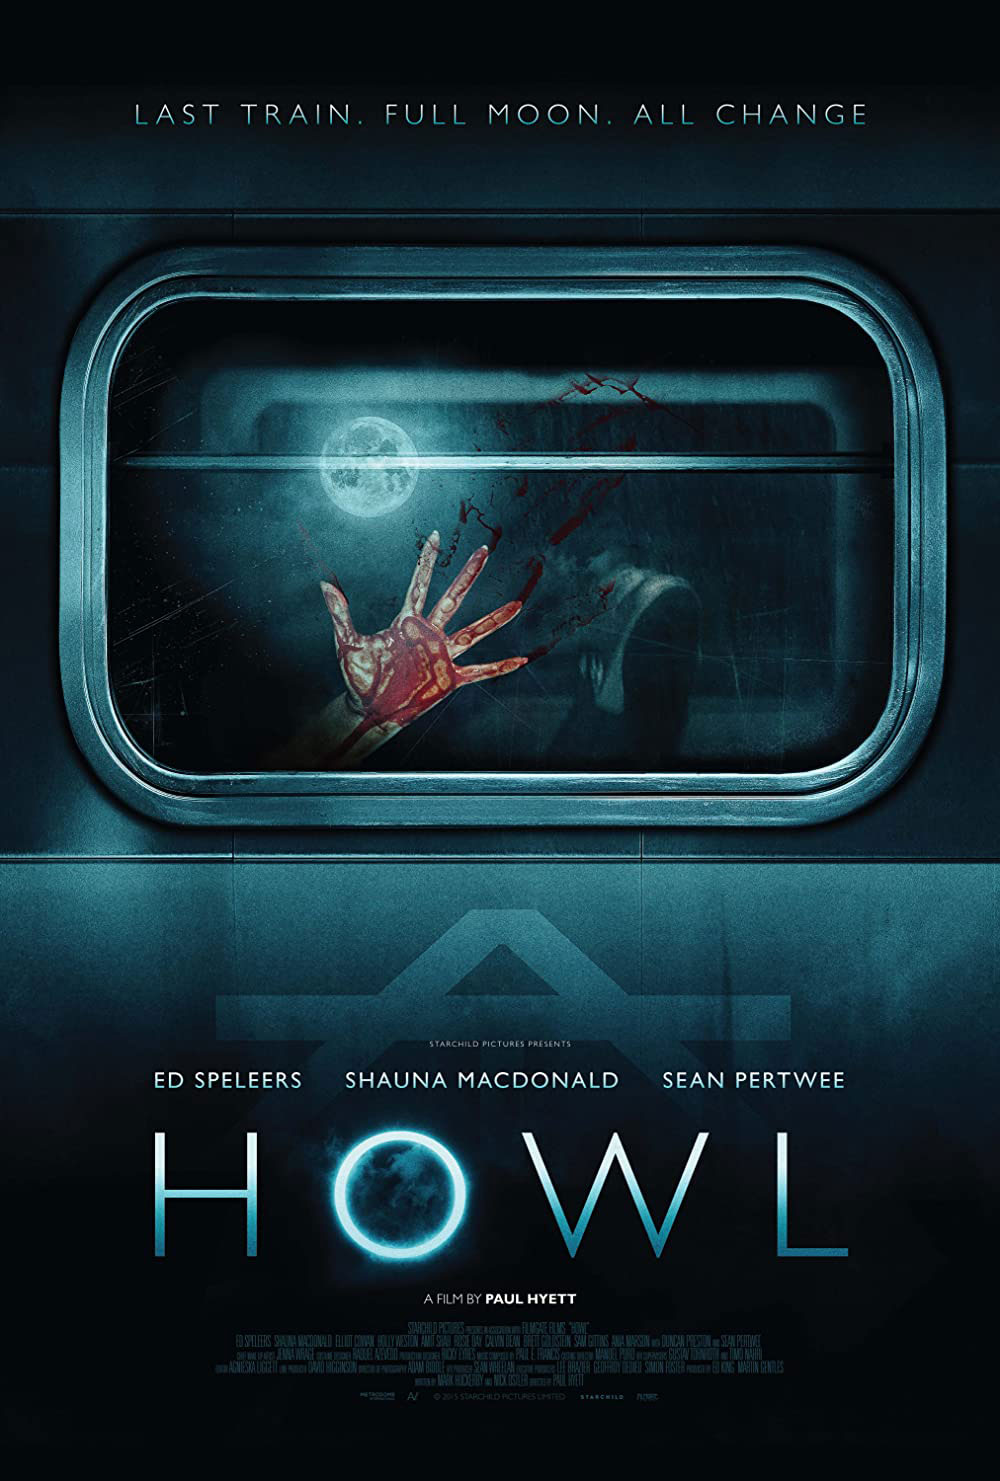 Howl 2015 movie poster